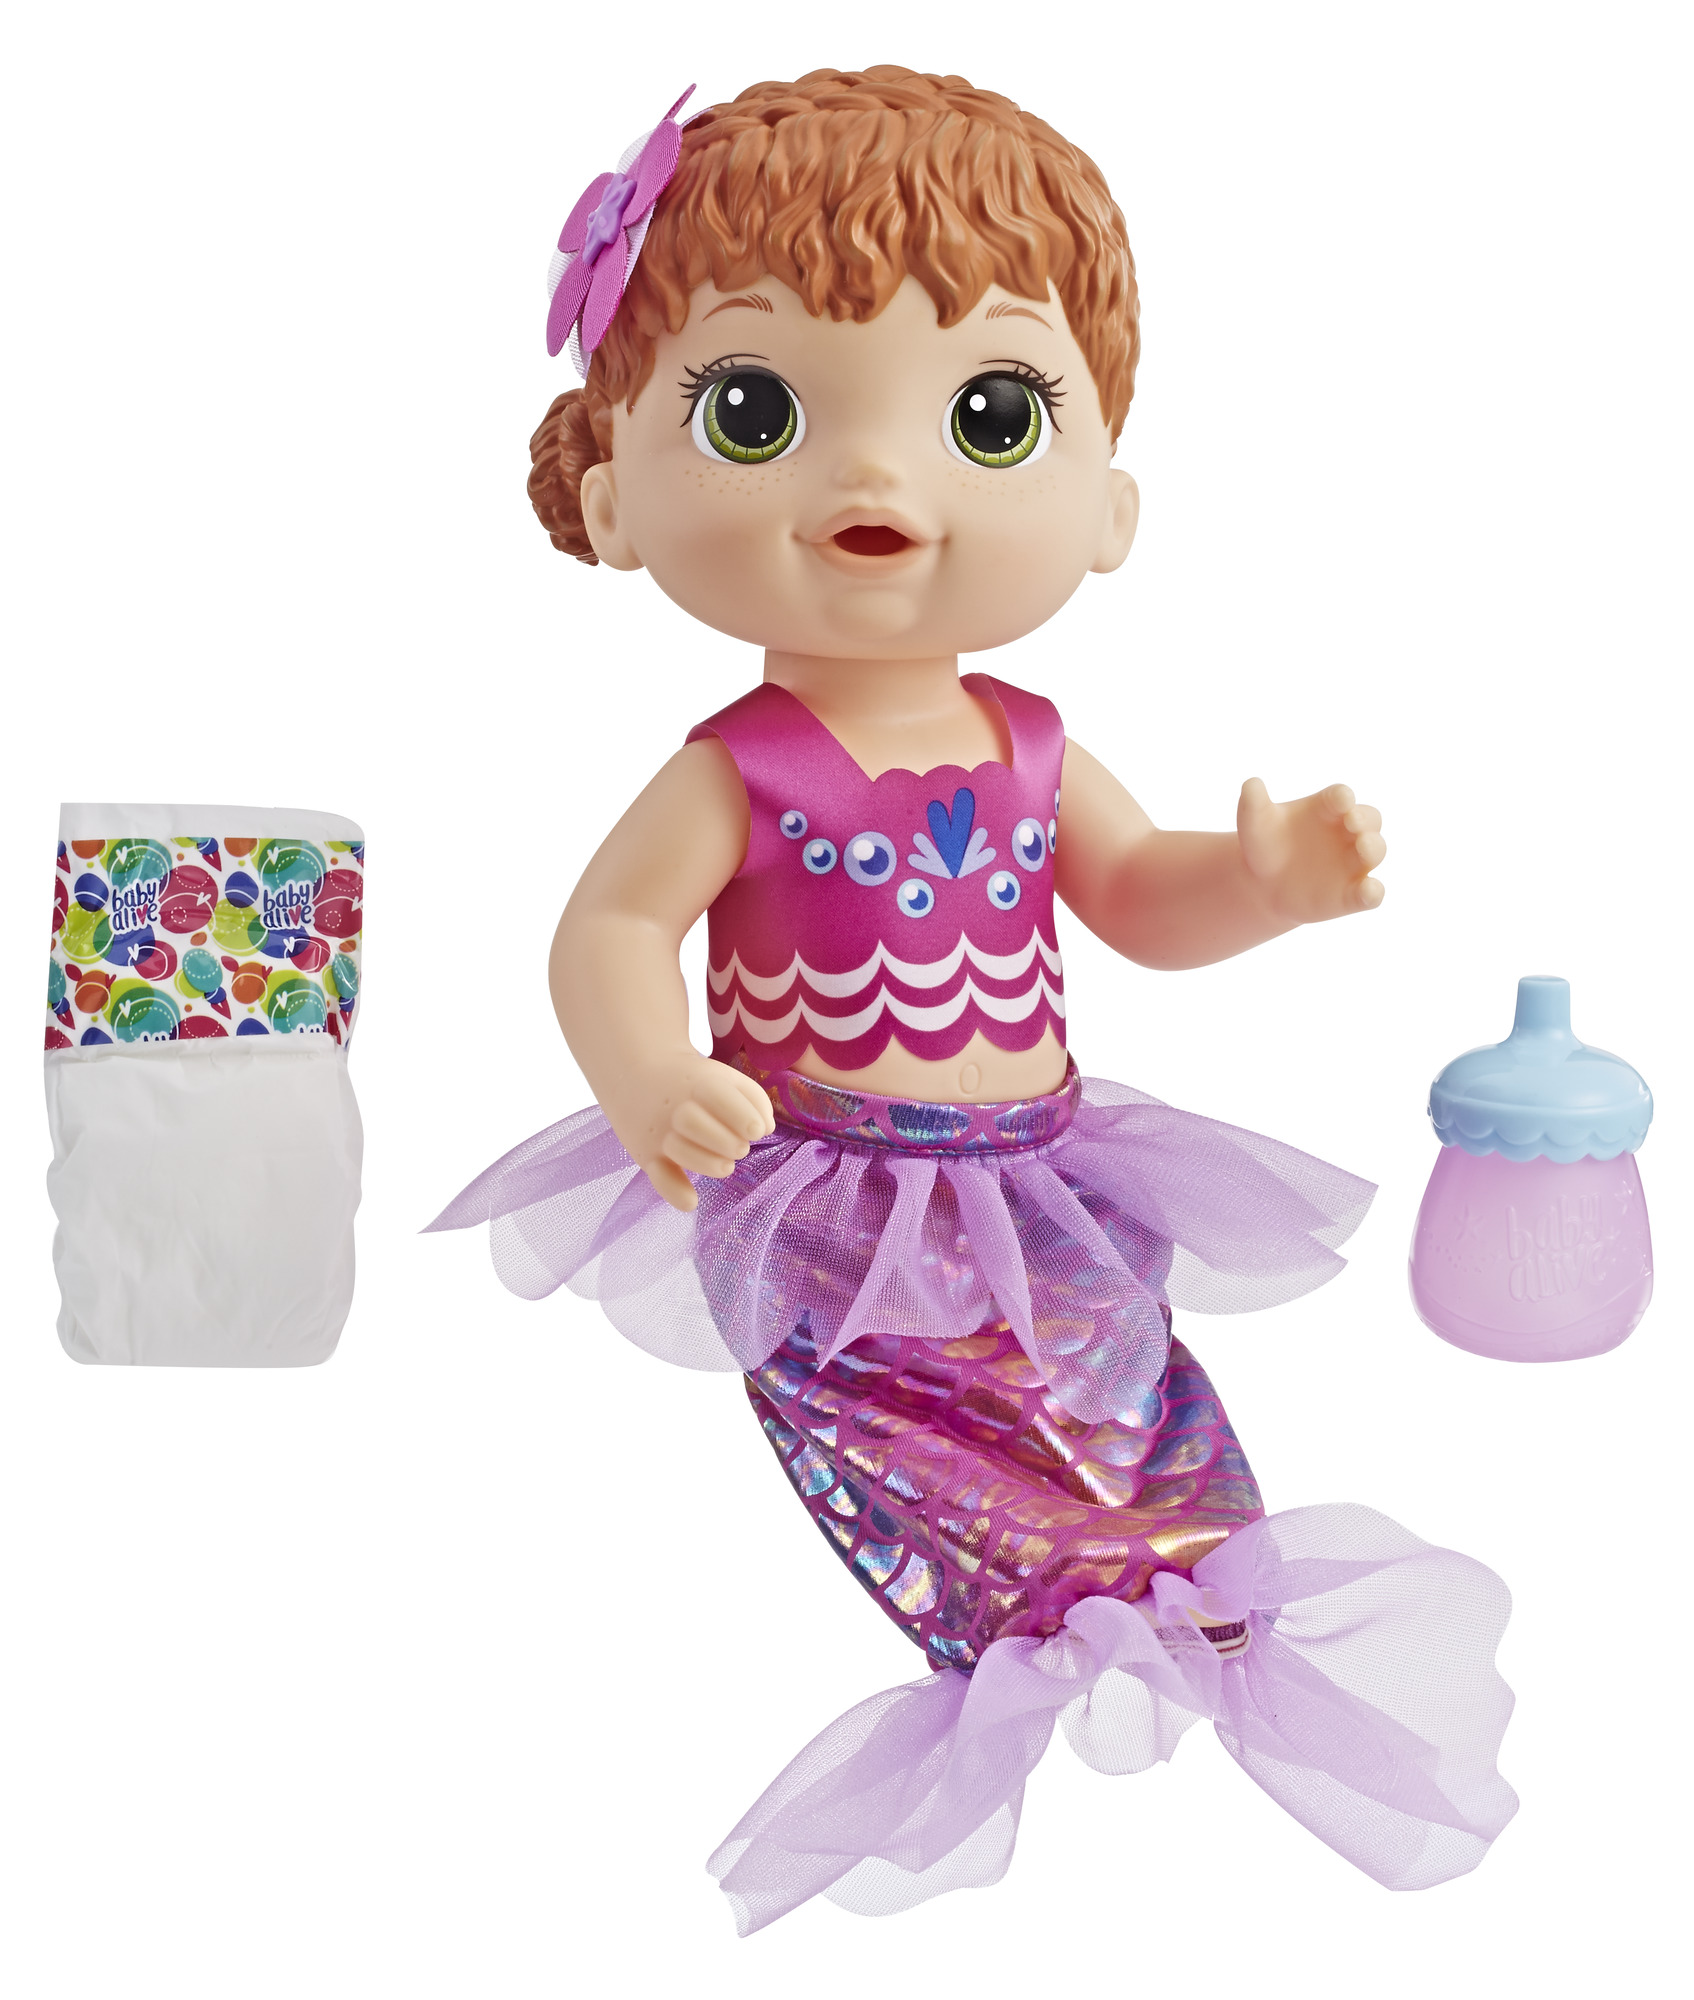 Baby Alive Shimmer Splash Mermaid Baby Doll Red Hair Girls Daughter Toy Gift 630509751839 Ebay